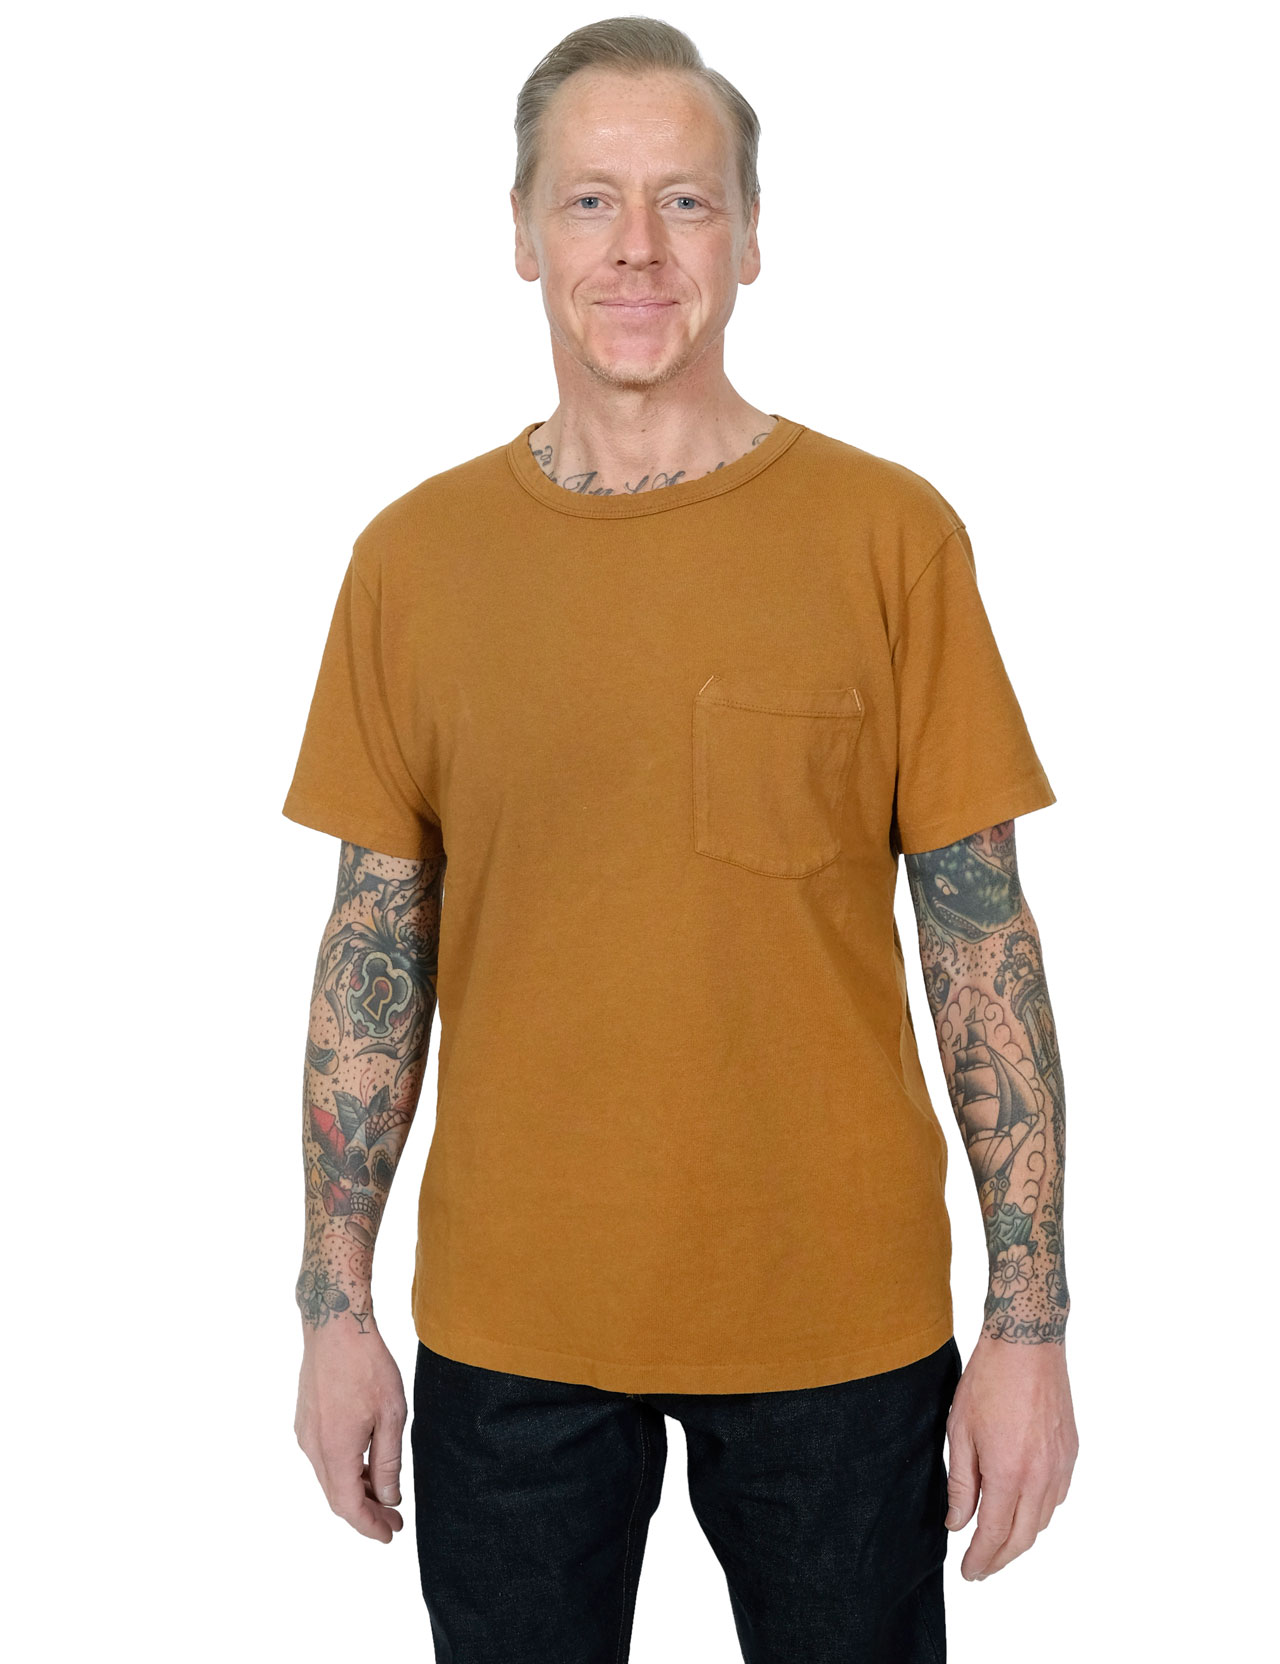 Freenote Cloth - 13 Ounce Pocket T-Shirt - Tobacco